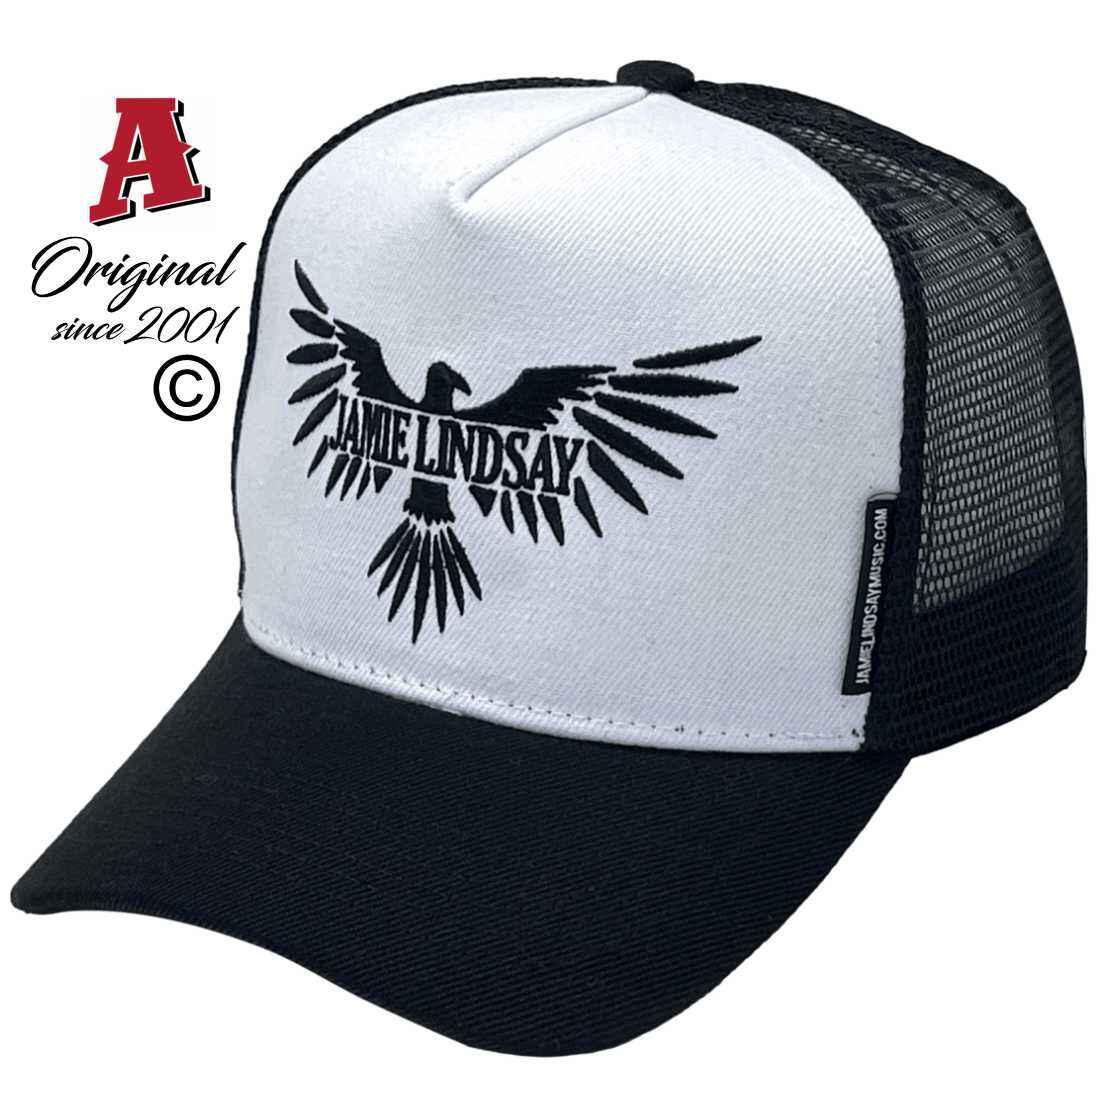 Jamie Lindsay Music Turramurra NSW HP Basic Aussie Trucker Hats with Australian HeadFit crown white black